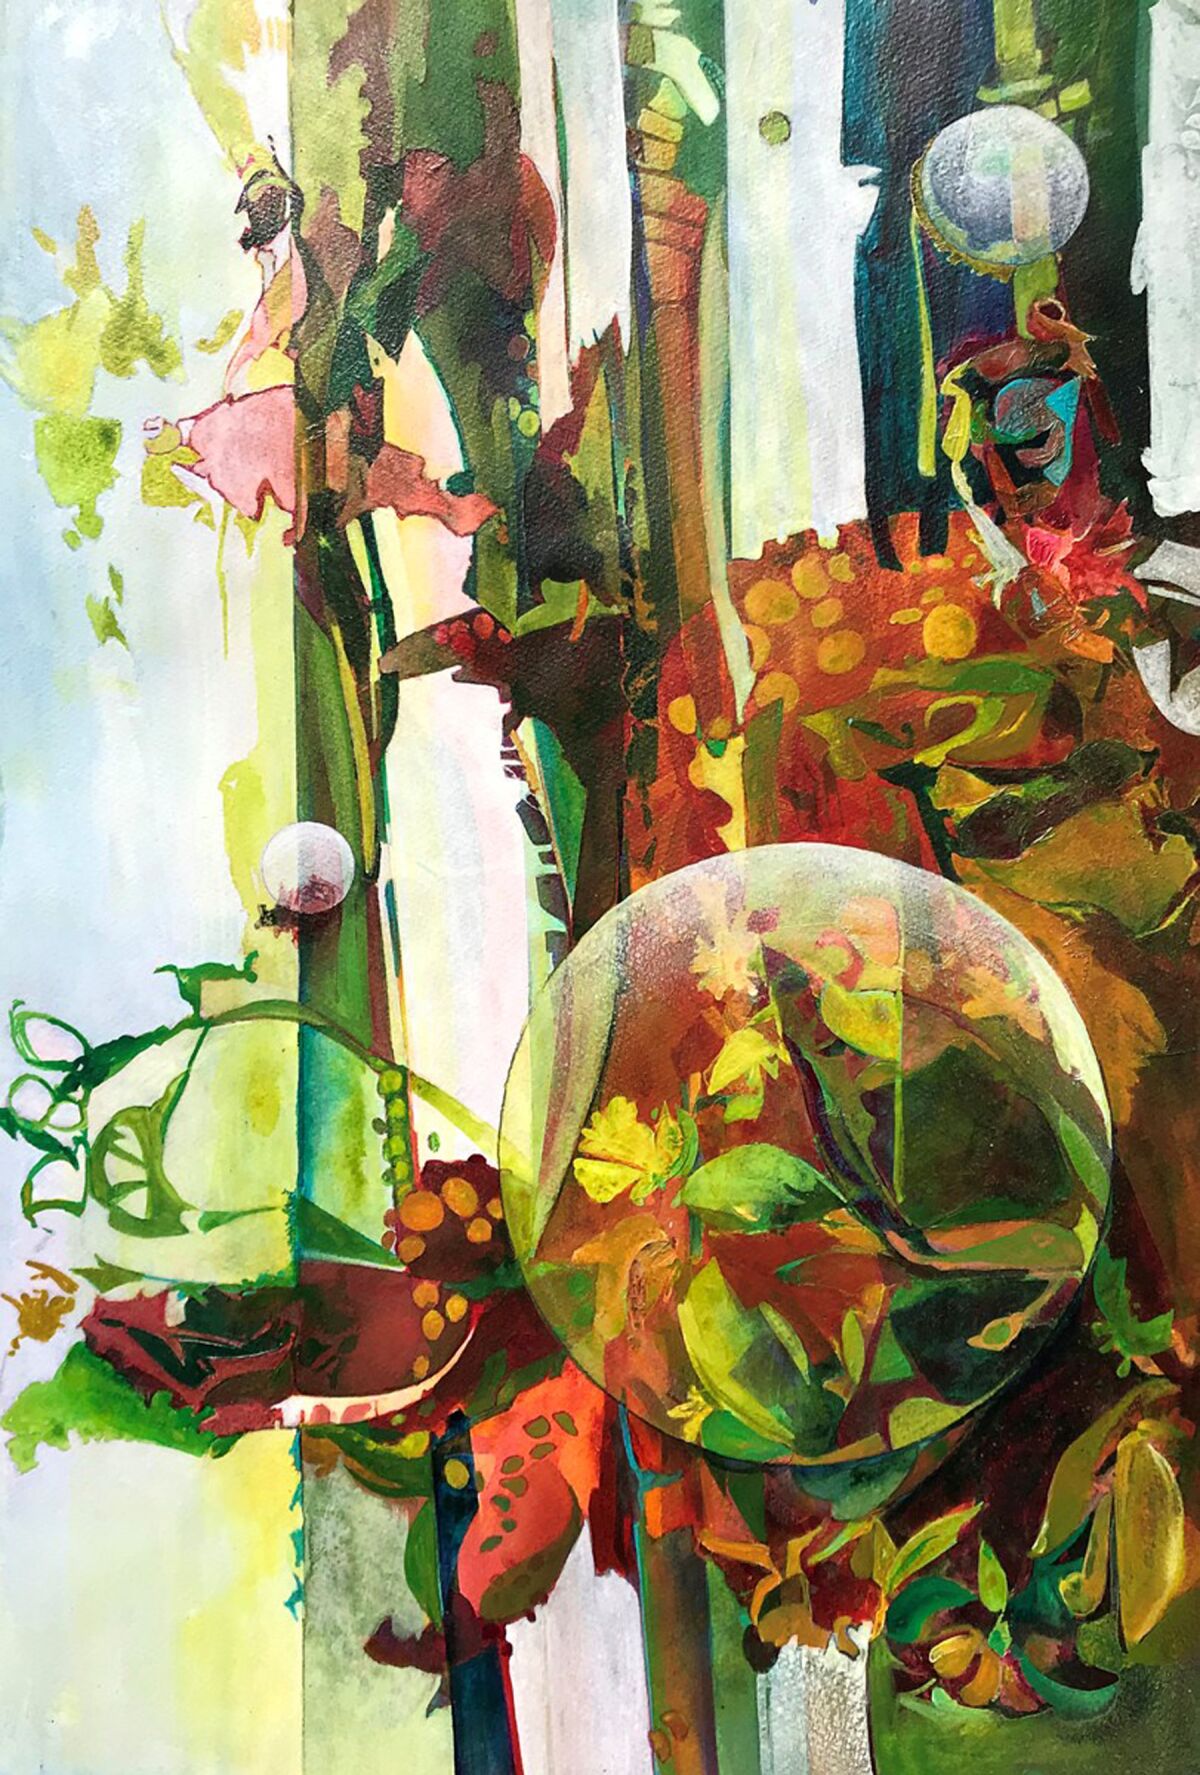 Carol Mansfield’s “Rainforest” acrylic painting.